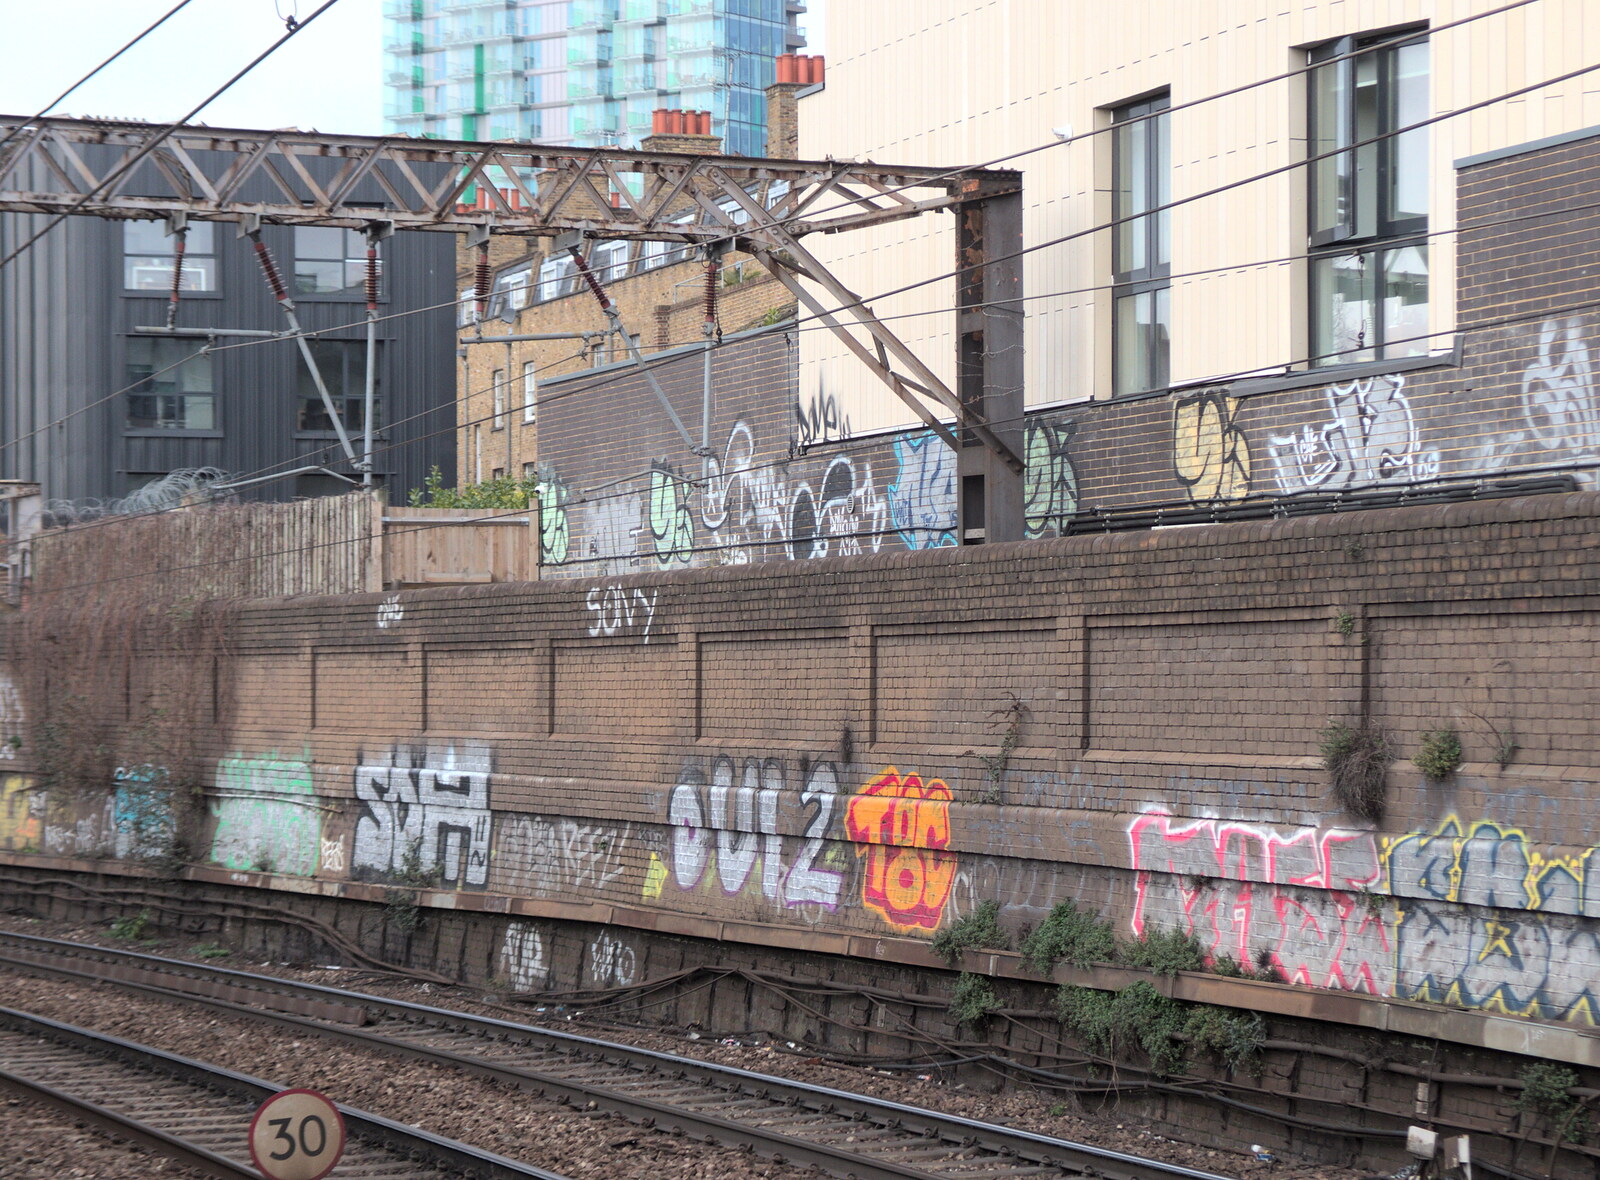 Graffiti on the walls near Brick Lane from Railway Graffiti, Tower Hamlets, London - 12th February 2019